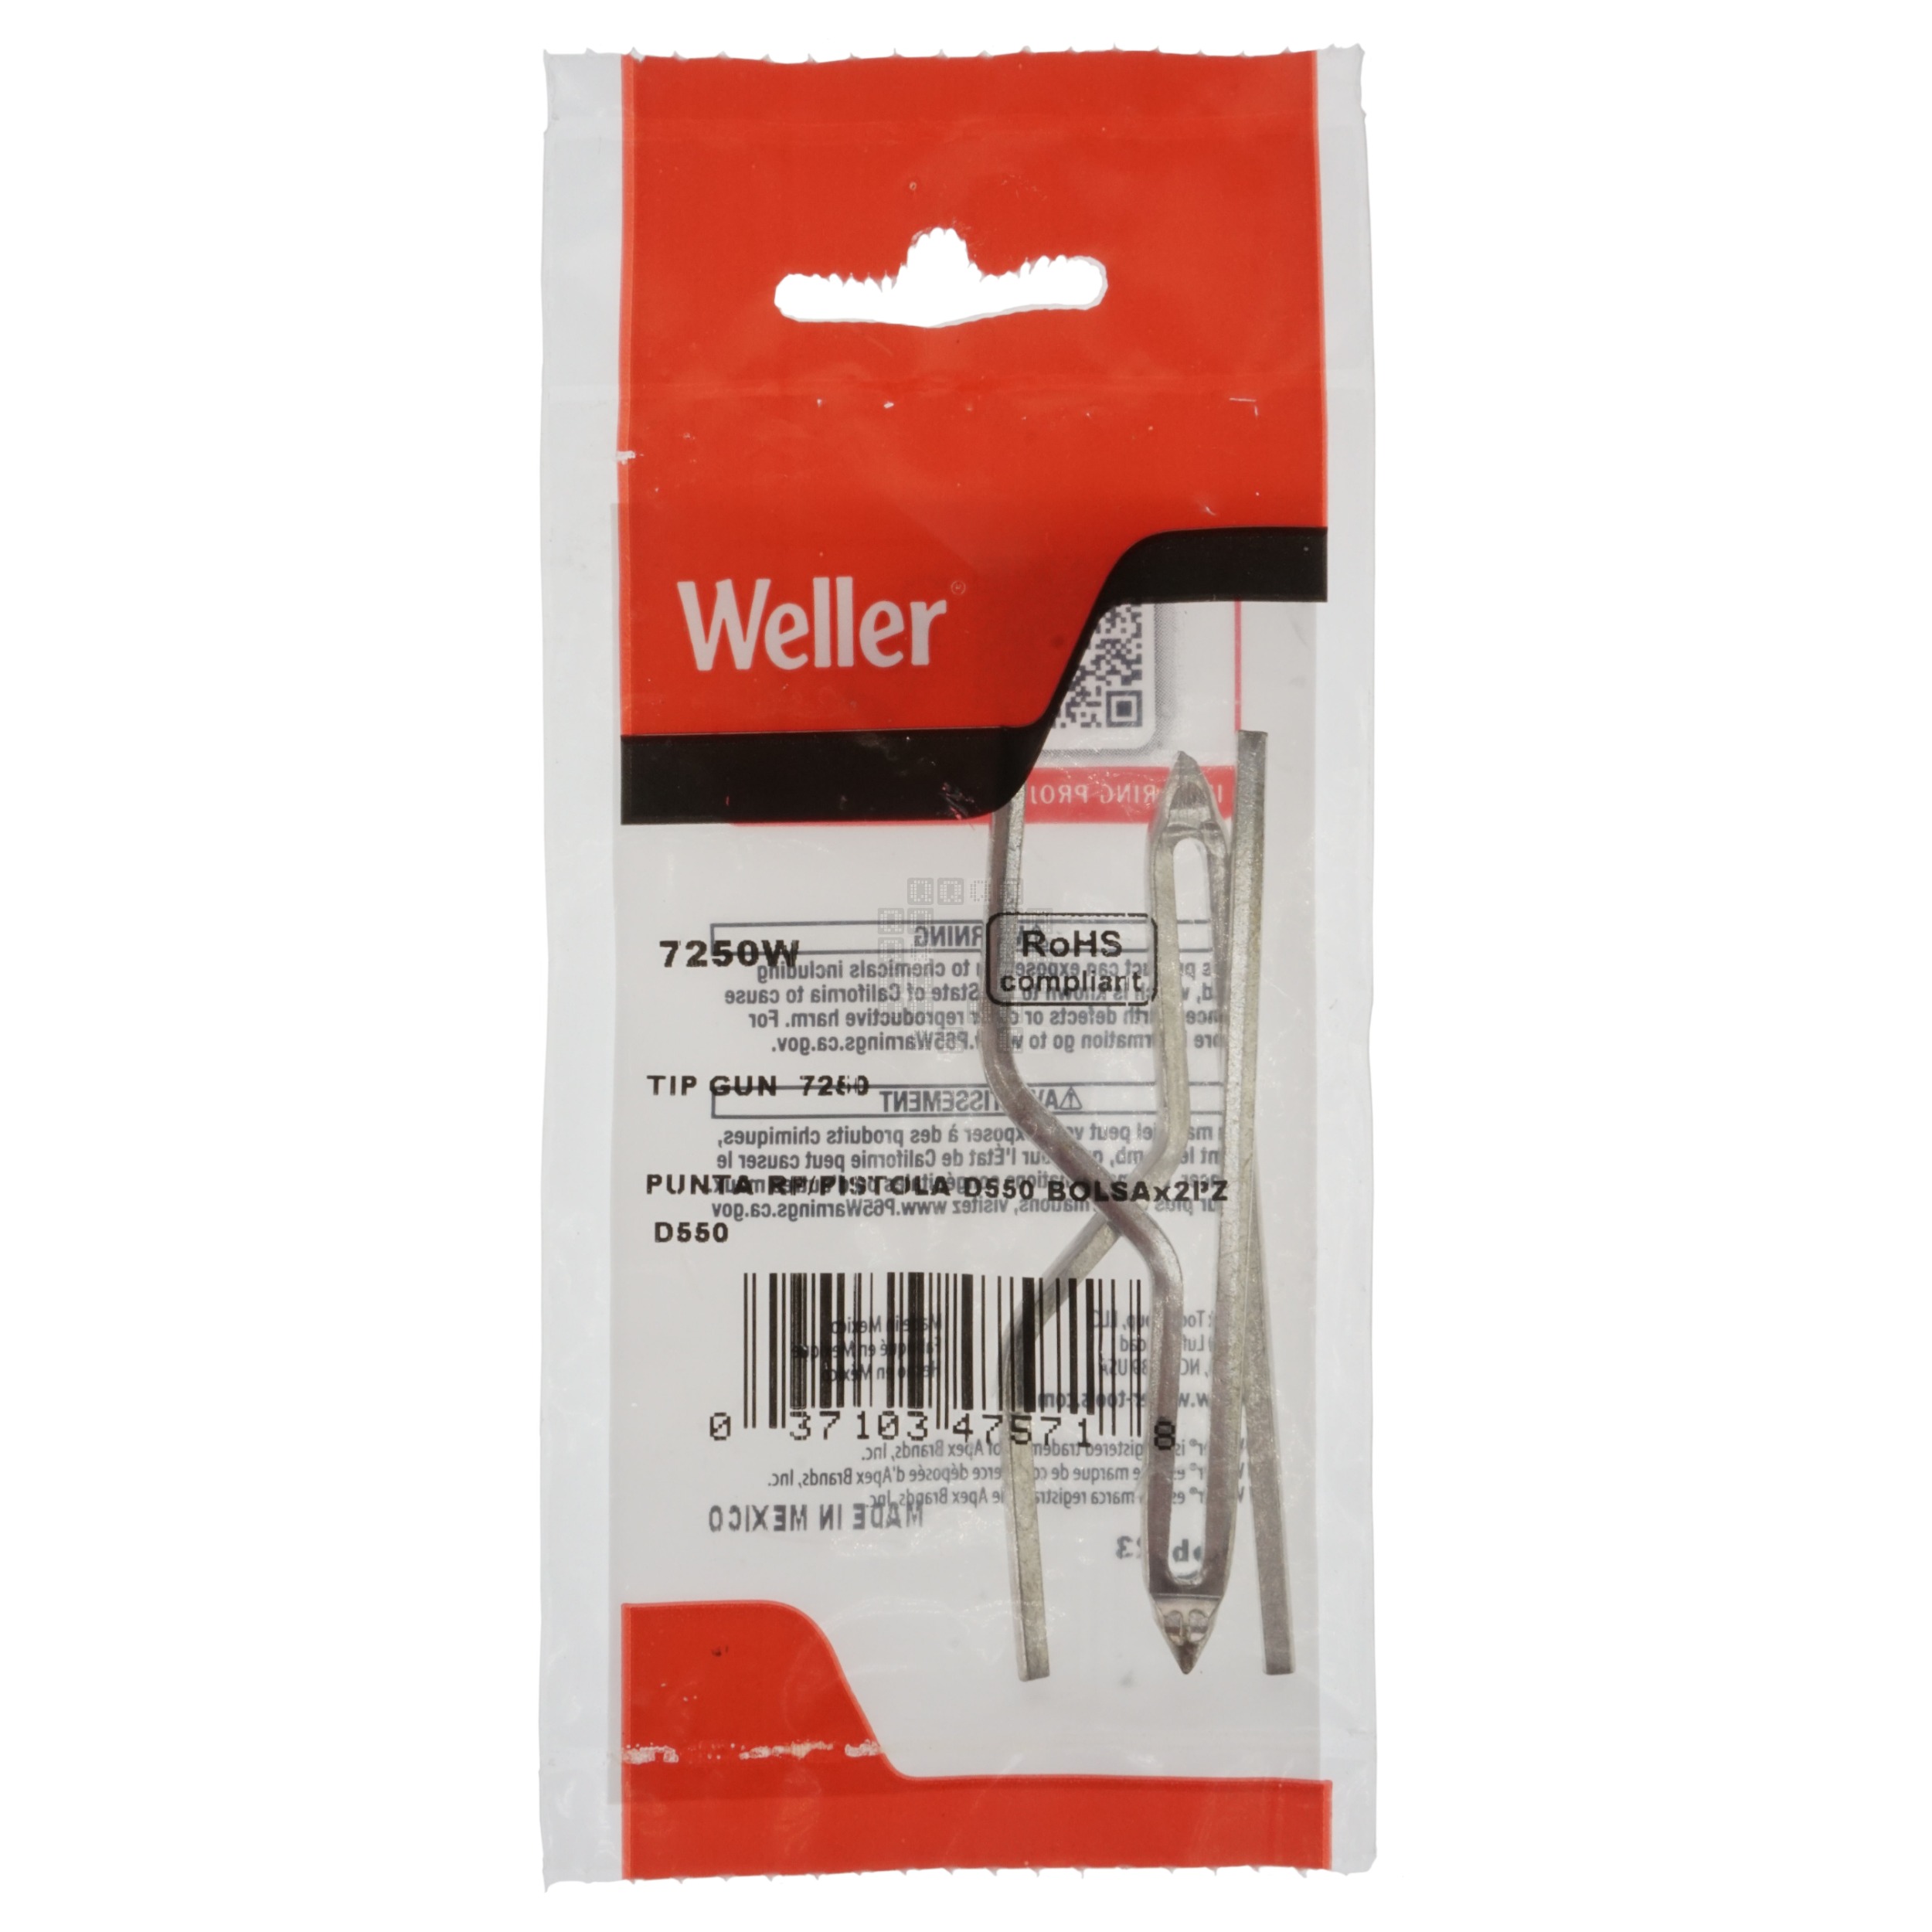 Weller 7250W D550 (200/260 Watt) Soldering Iron Tip, 2-Pack